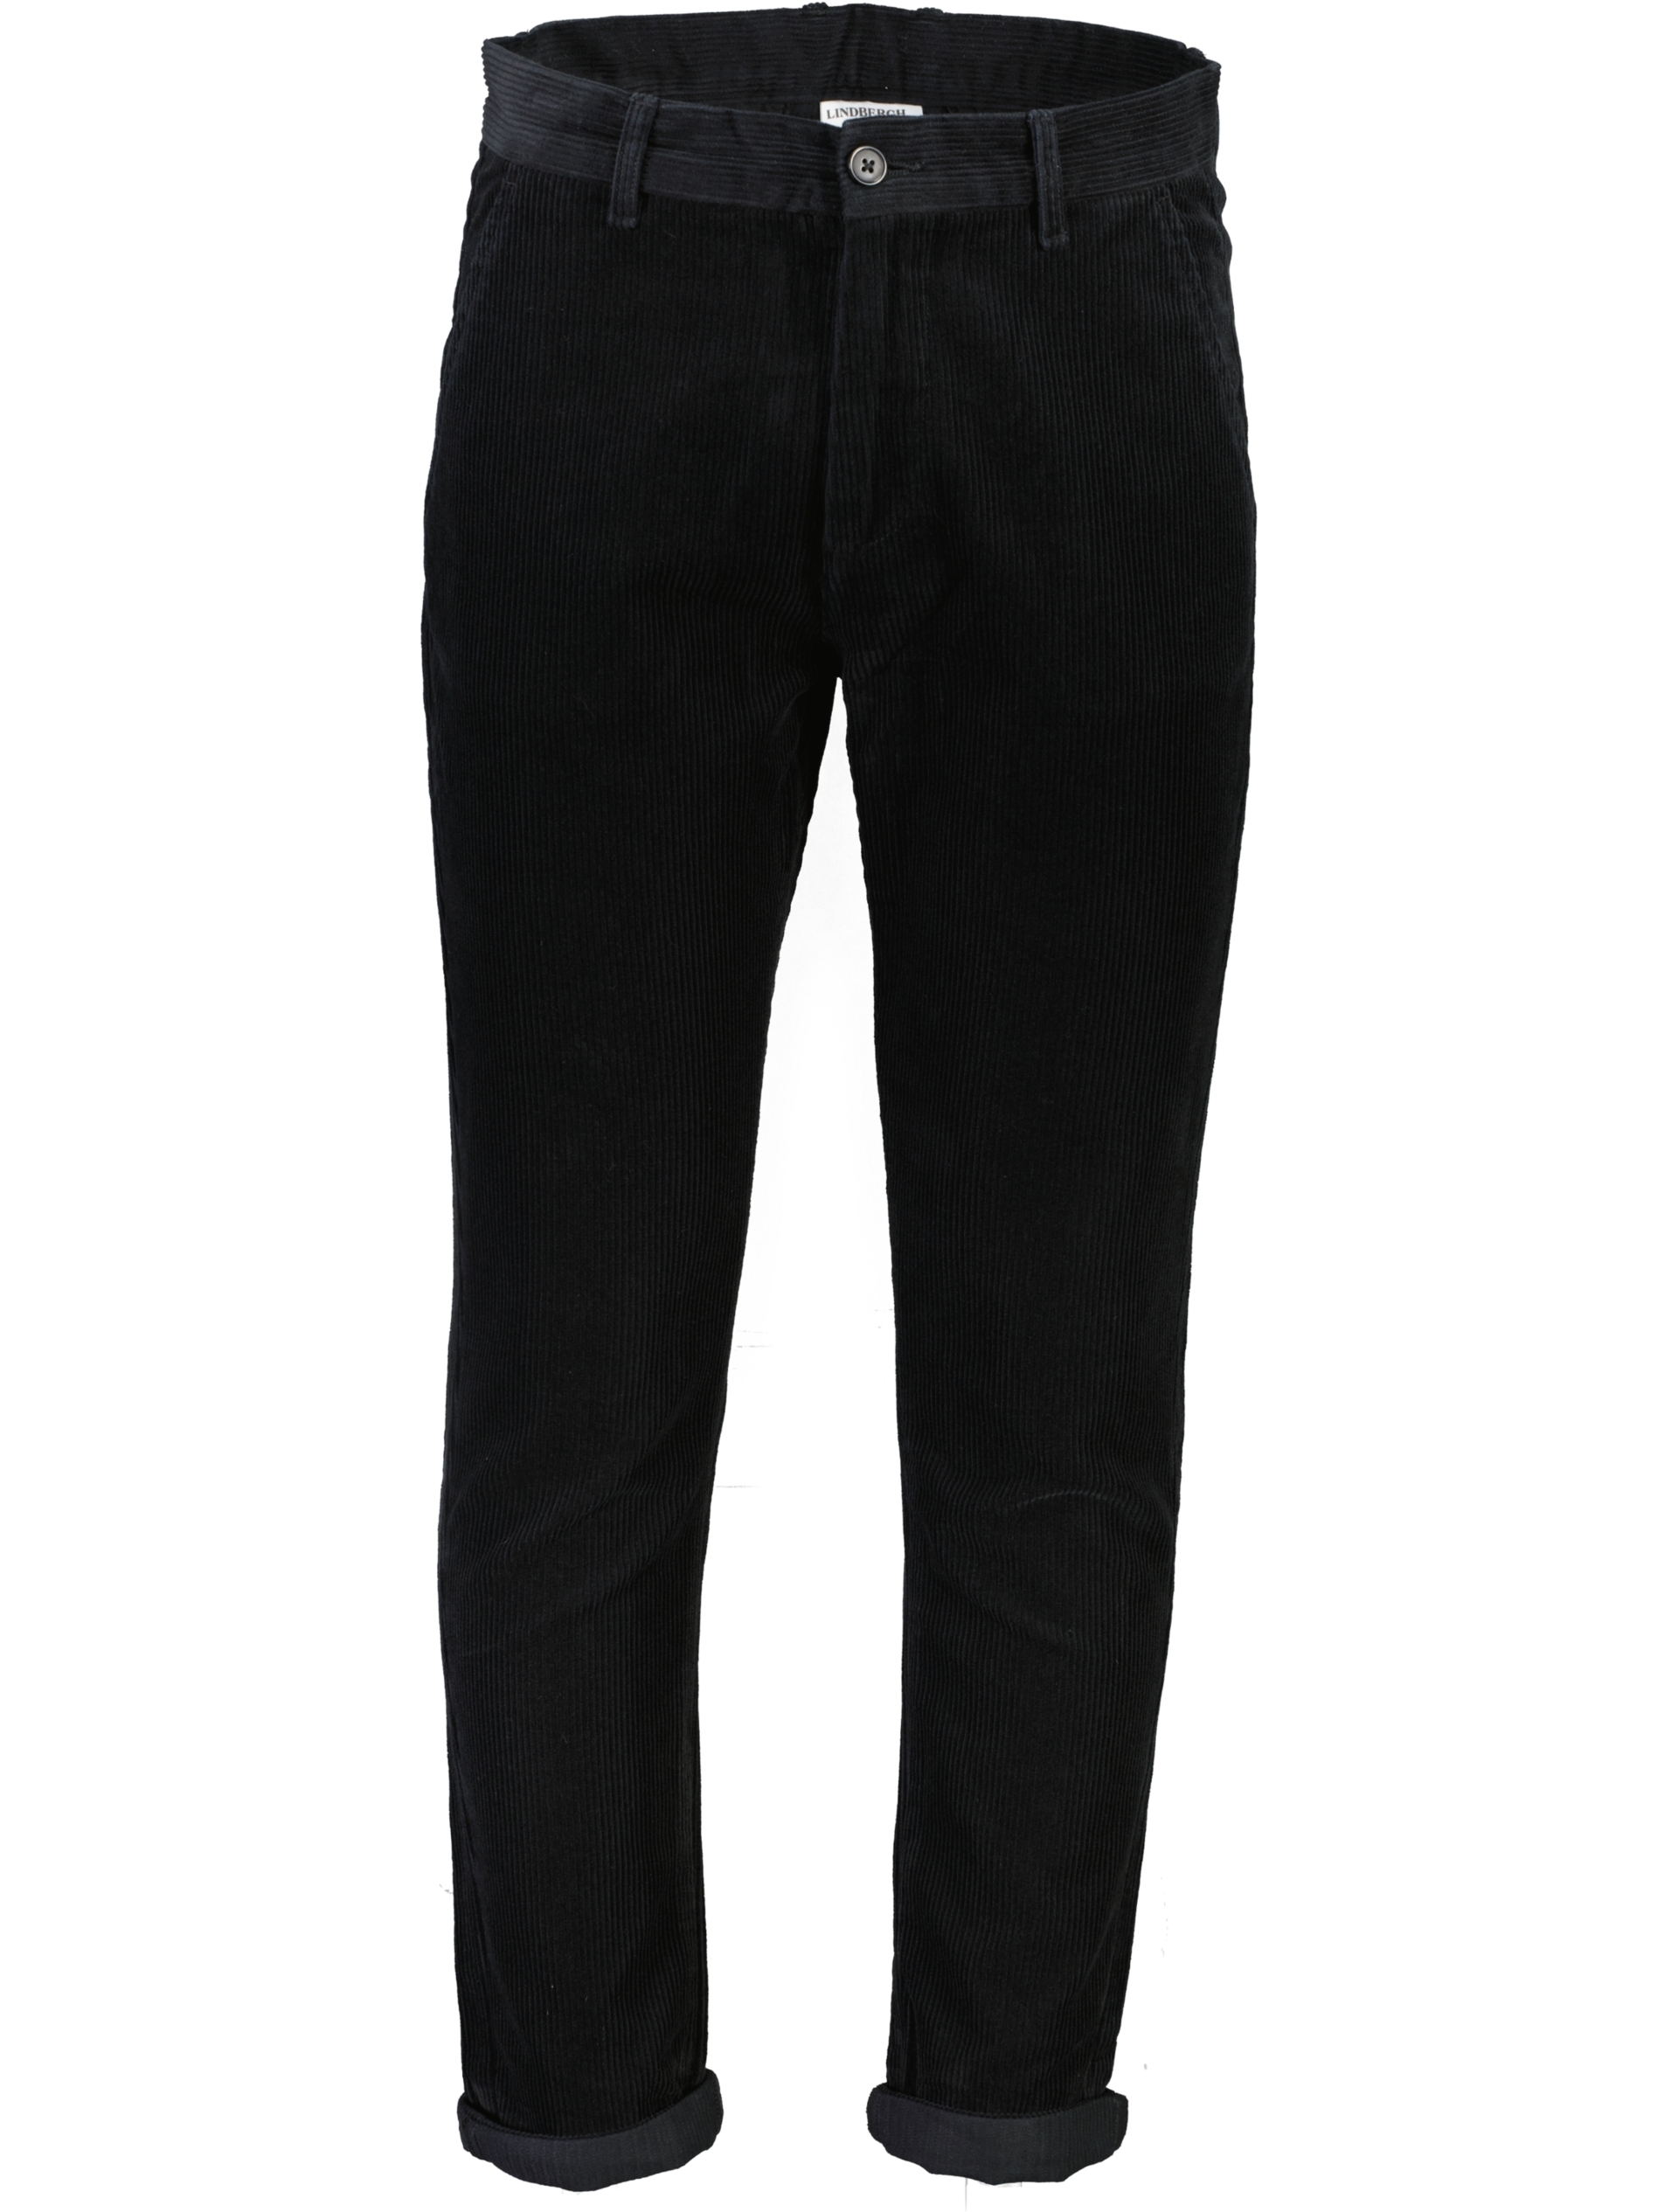 Lindbergh Corduroy trousers black / black 324